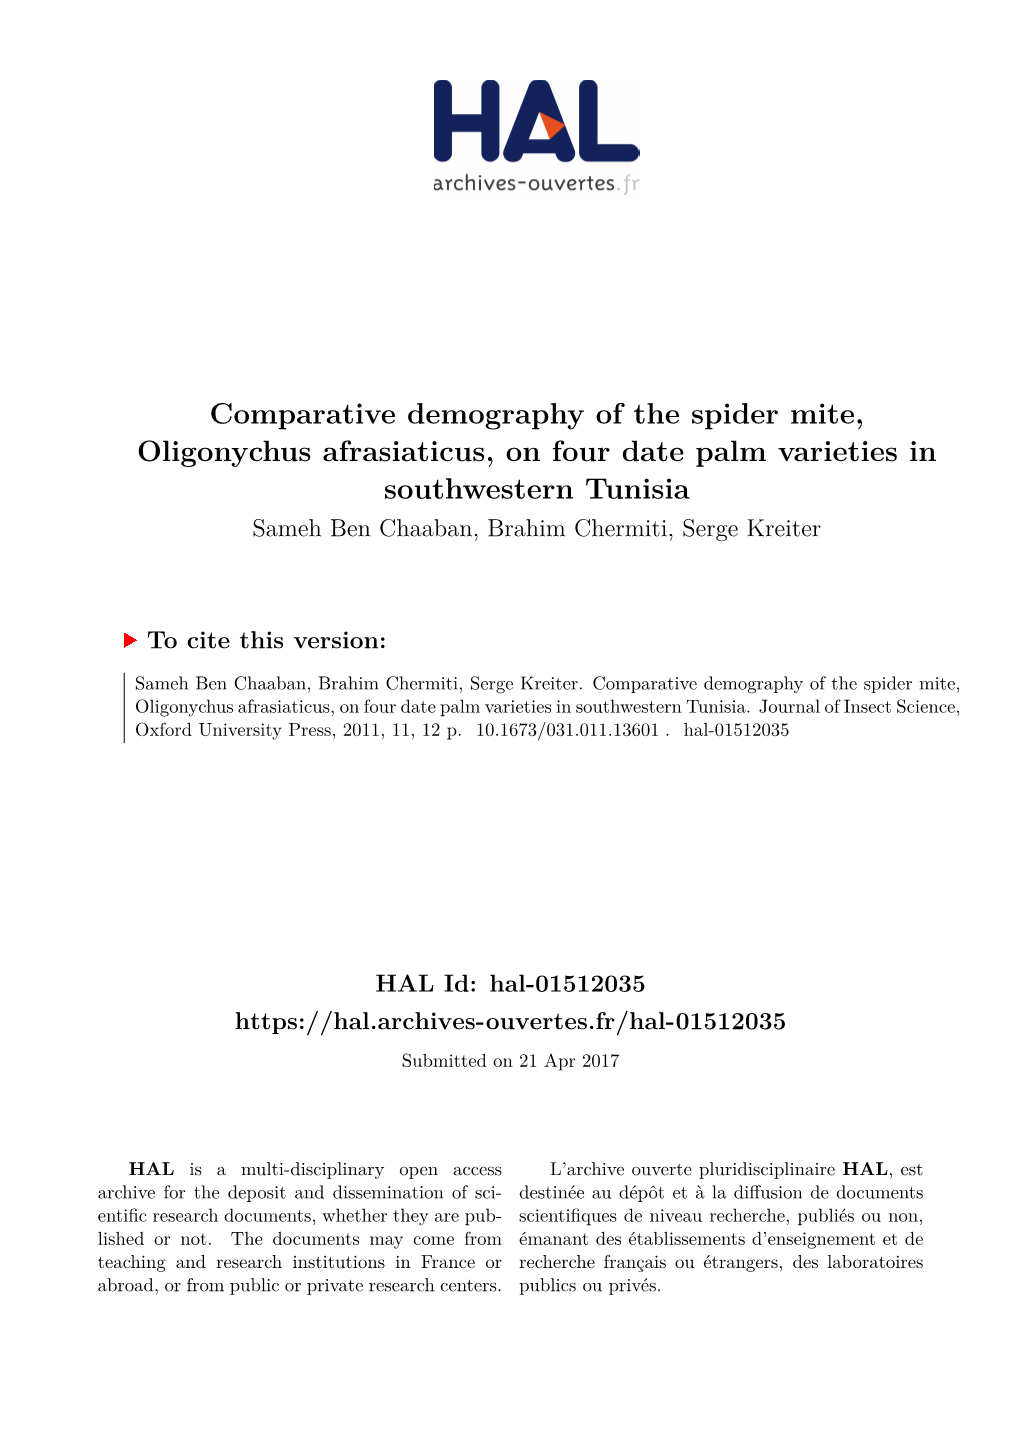 Comparative Demography of the Spider Mite, Oligonychus